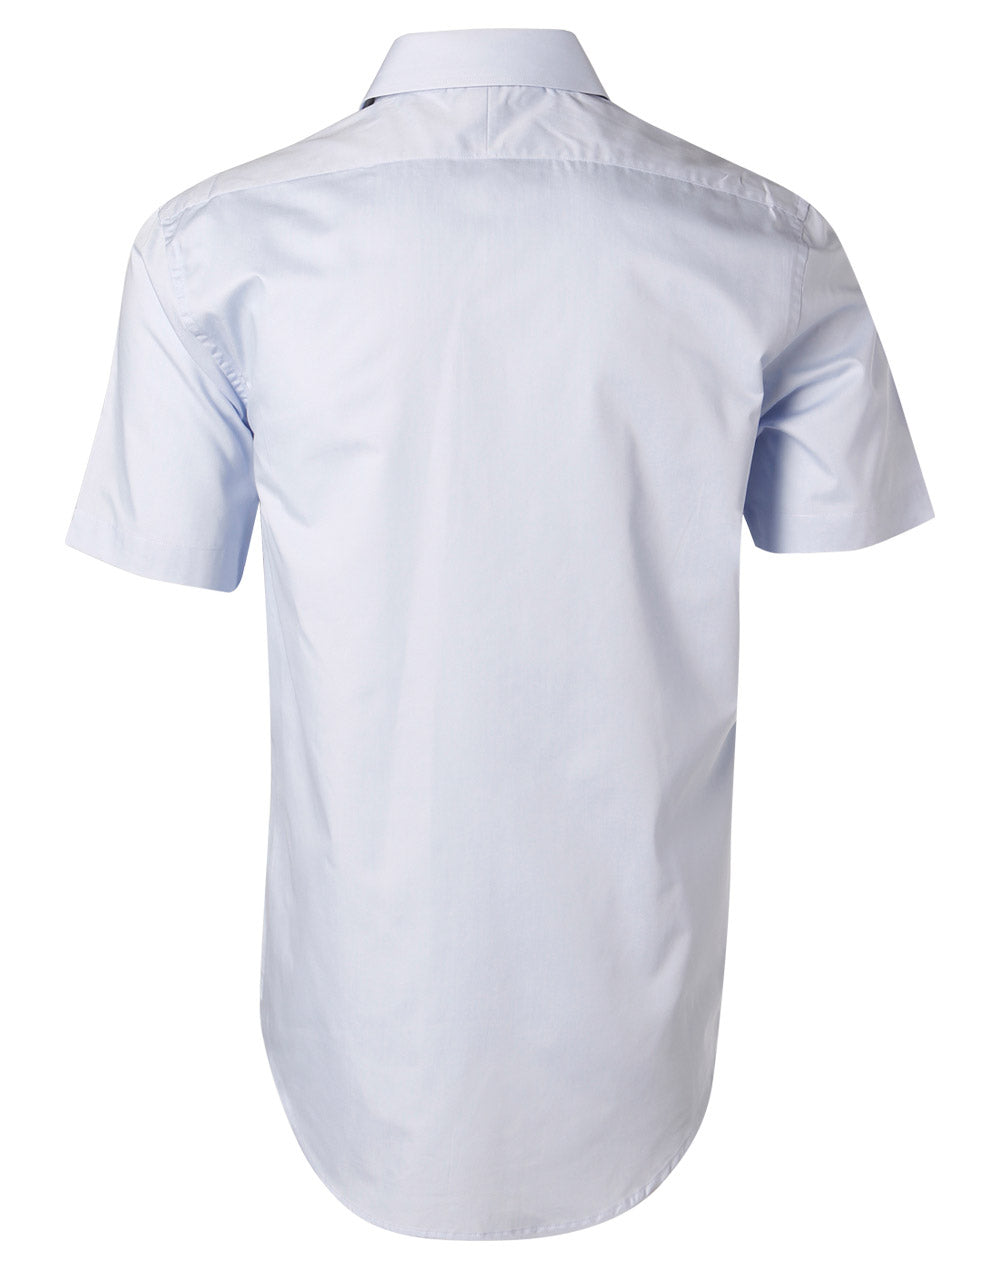 Winning Spirit-Men's Fine Twill Short Sleeve Shirt-M7030S